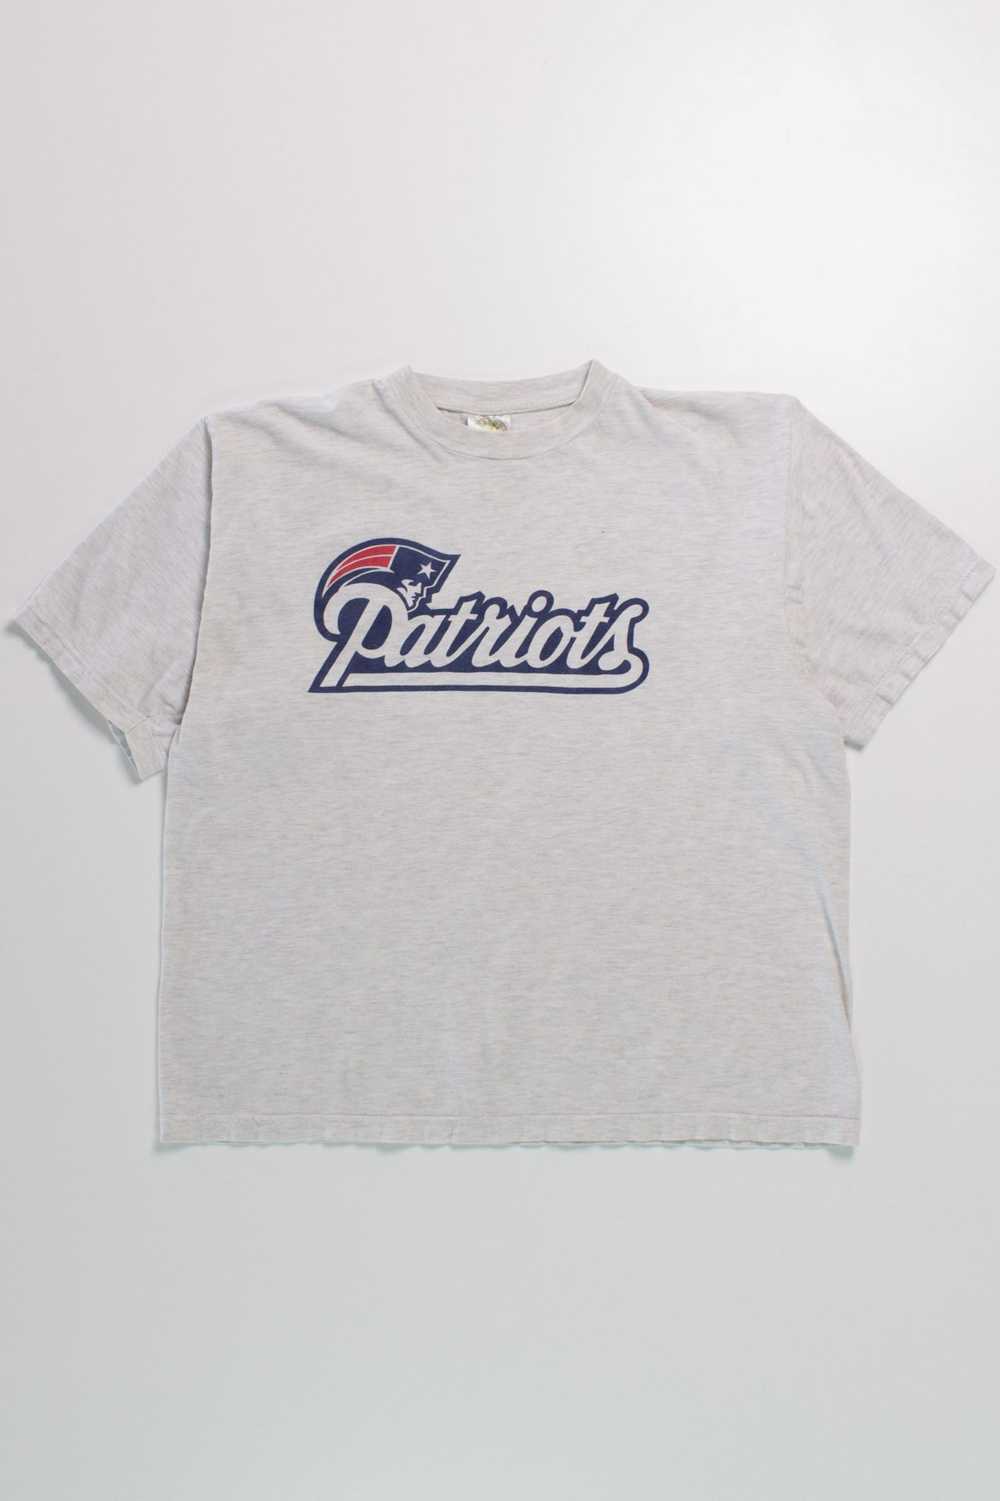 Vintage Patriots Sports T-Shirt - image 2